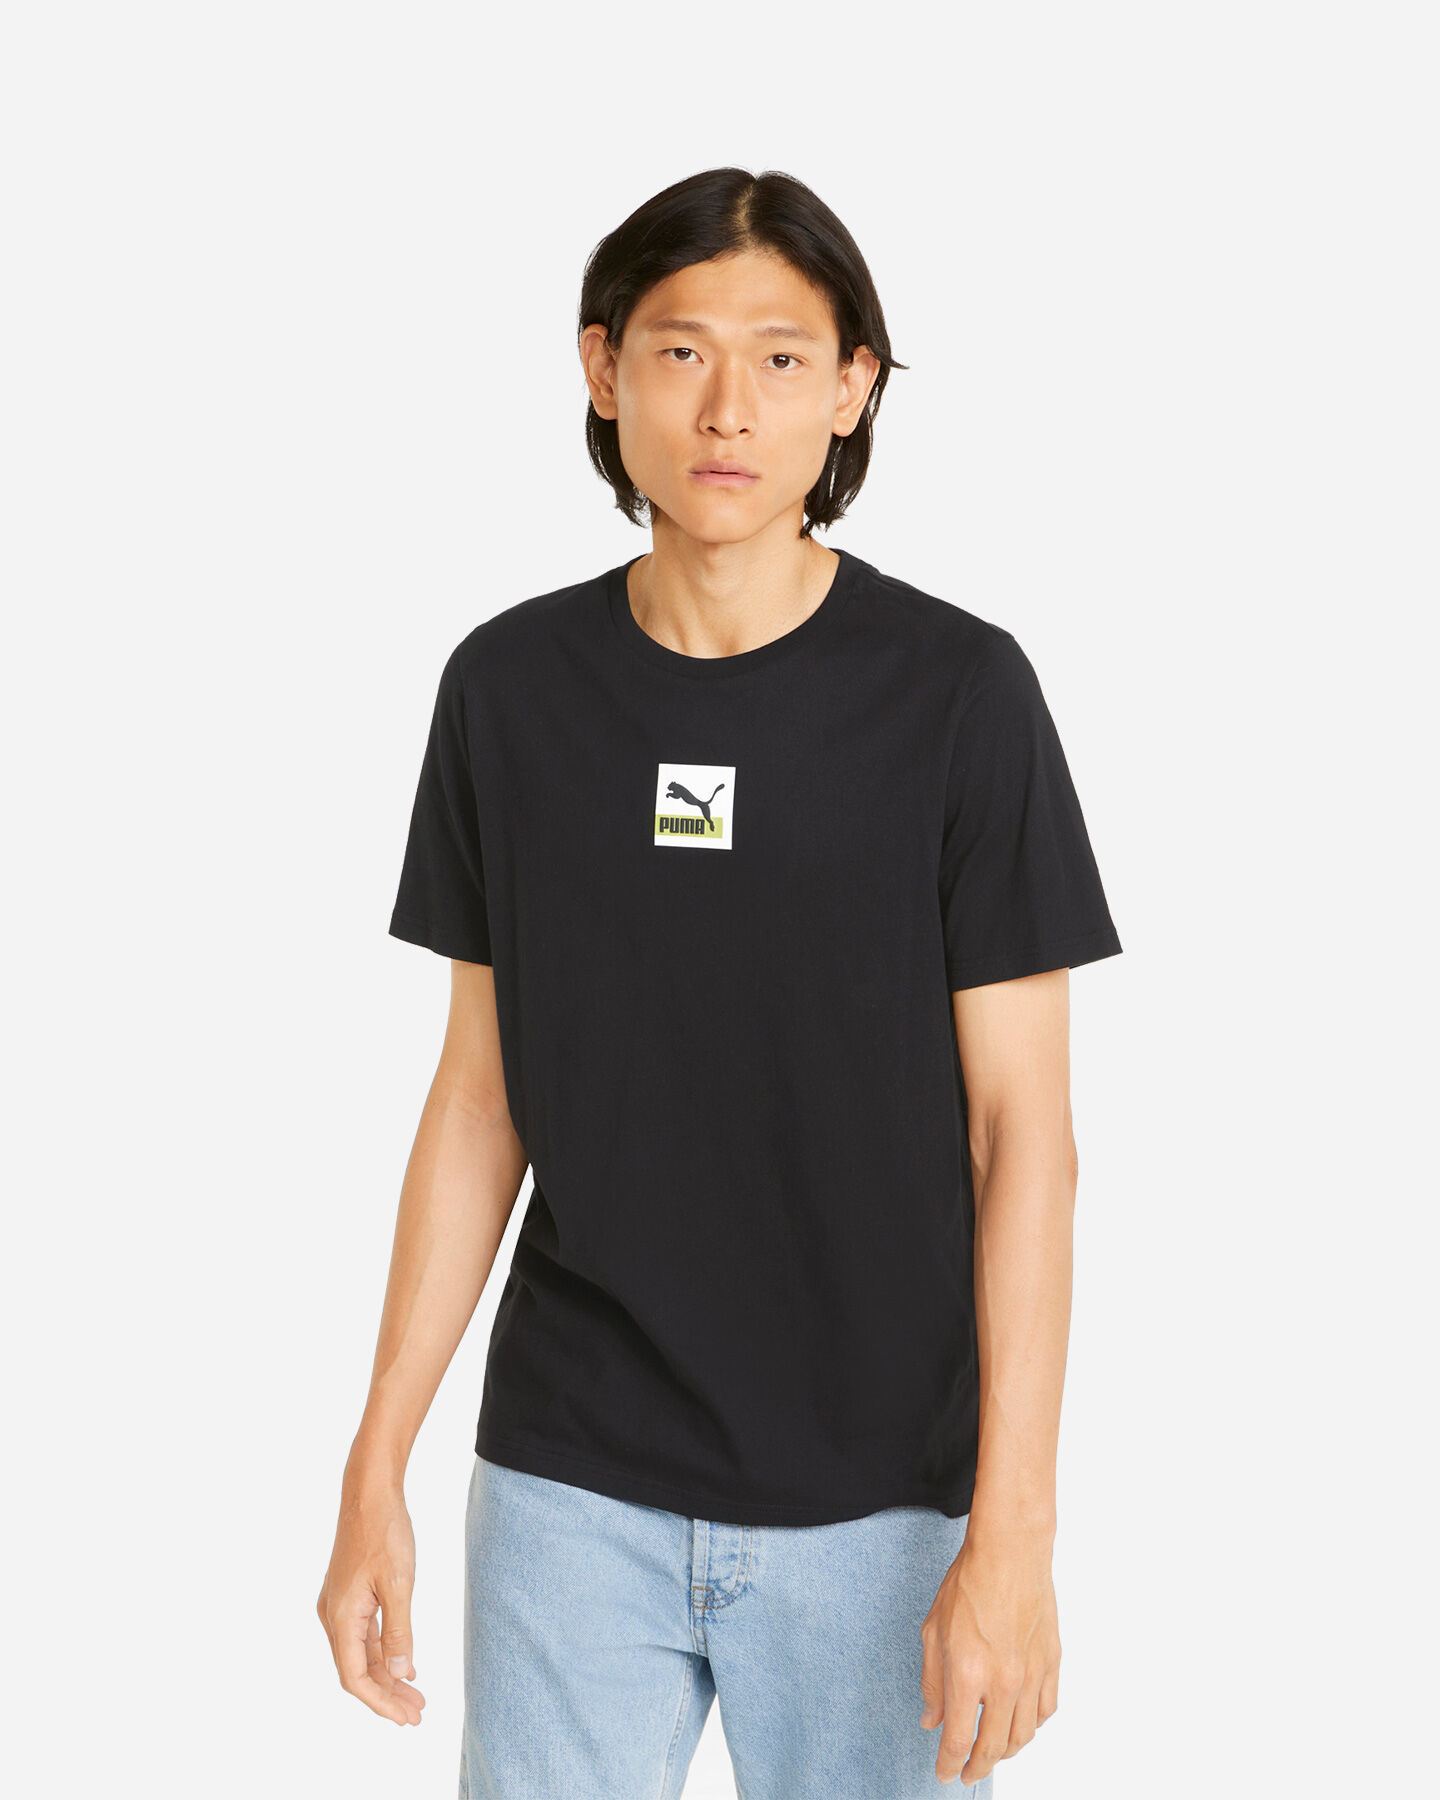  T-Shirt PUMA BRAND LOVE M S5399559|01|S scatto 2